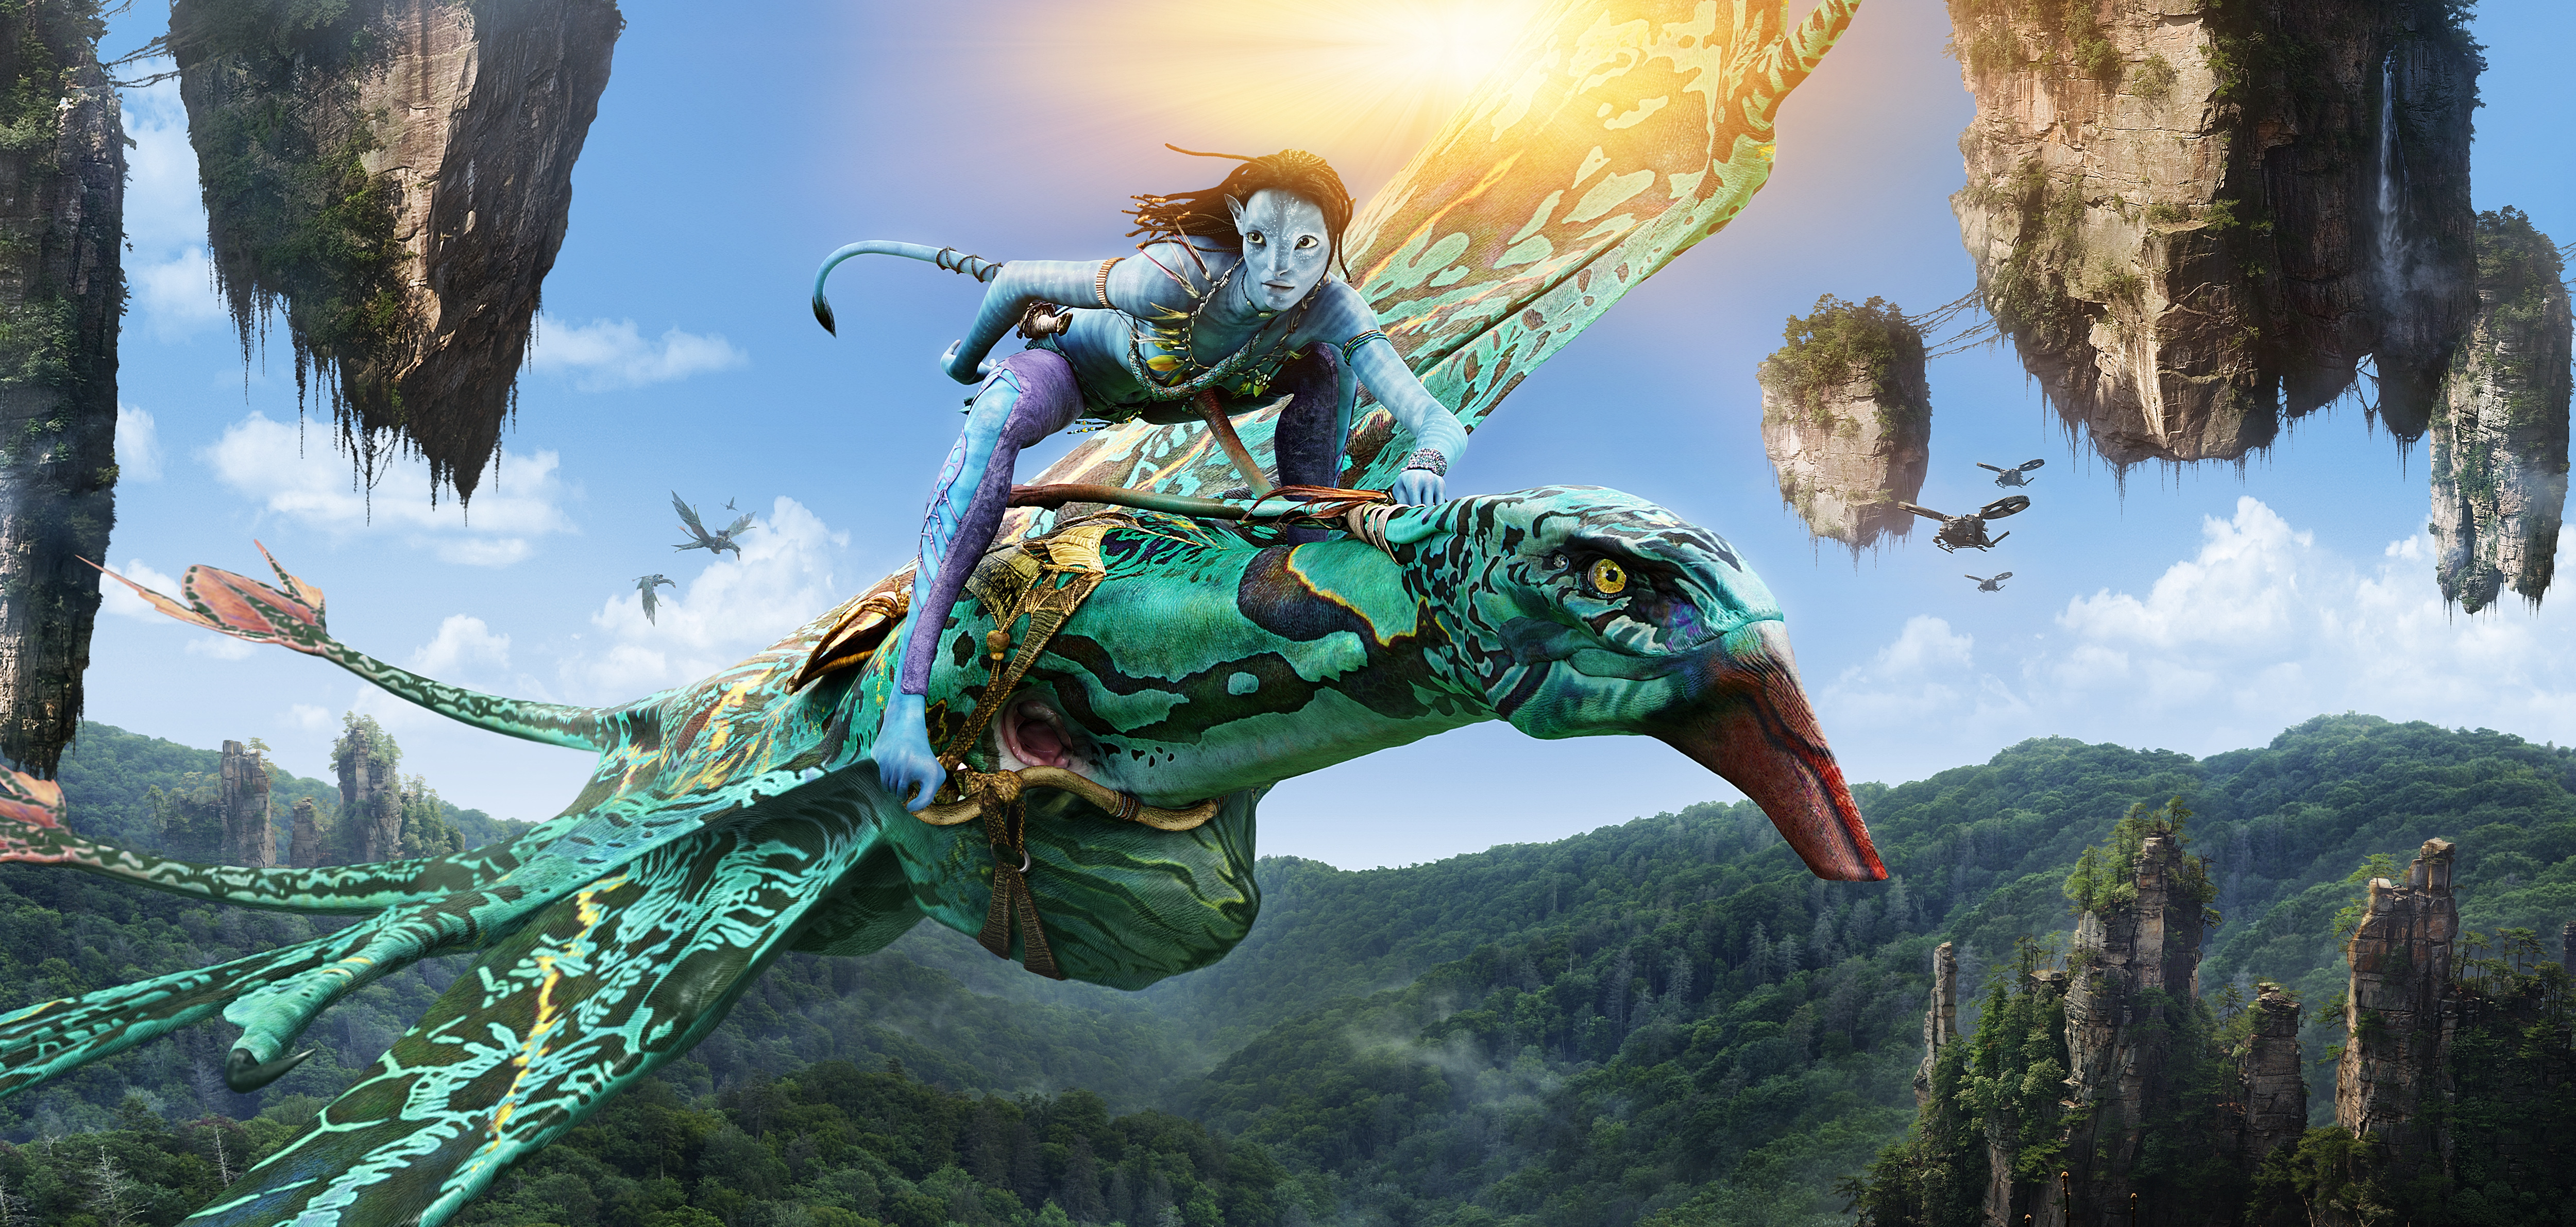 avatar wallpaper,action adventure game,pc game,cg artwork,games,mythology